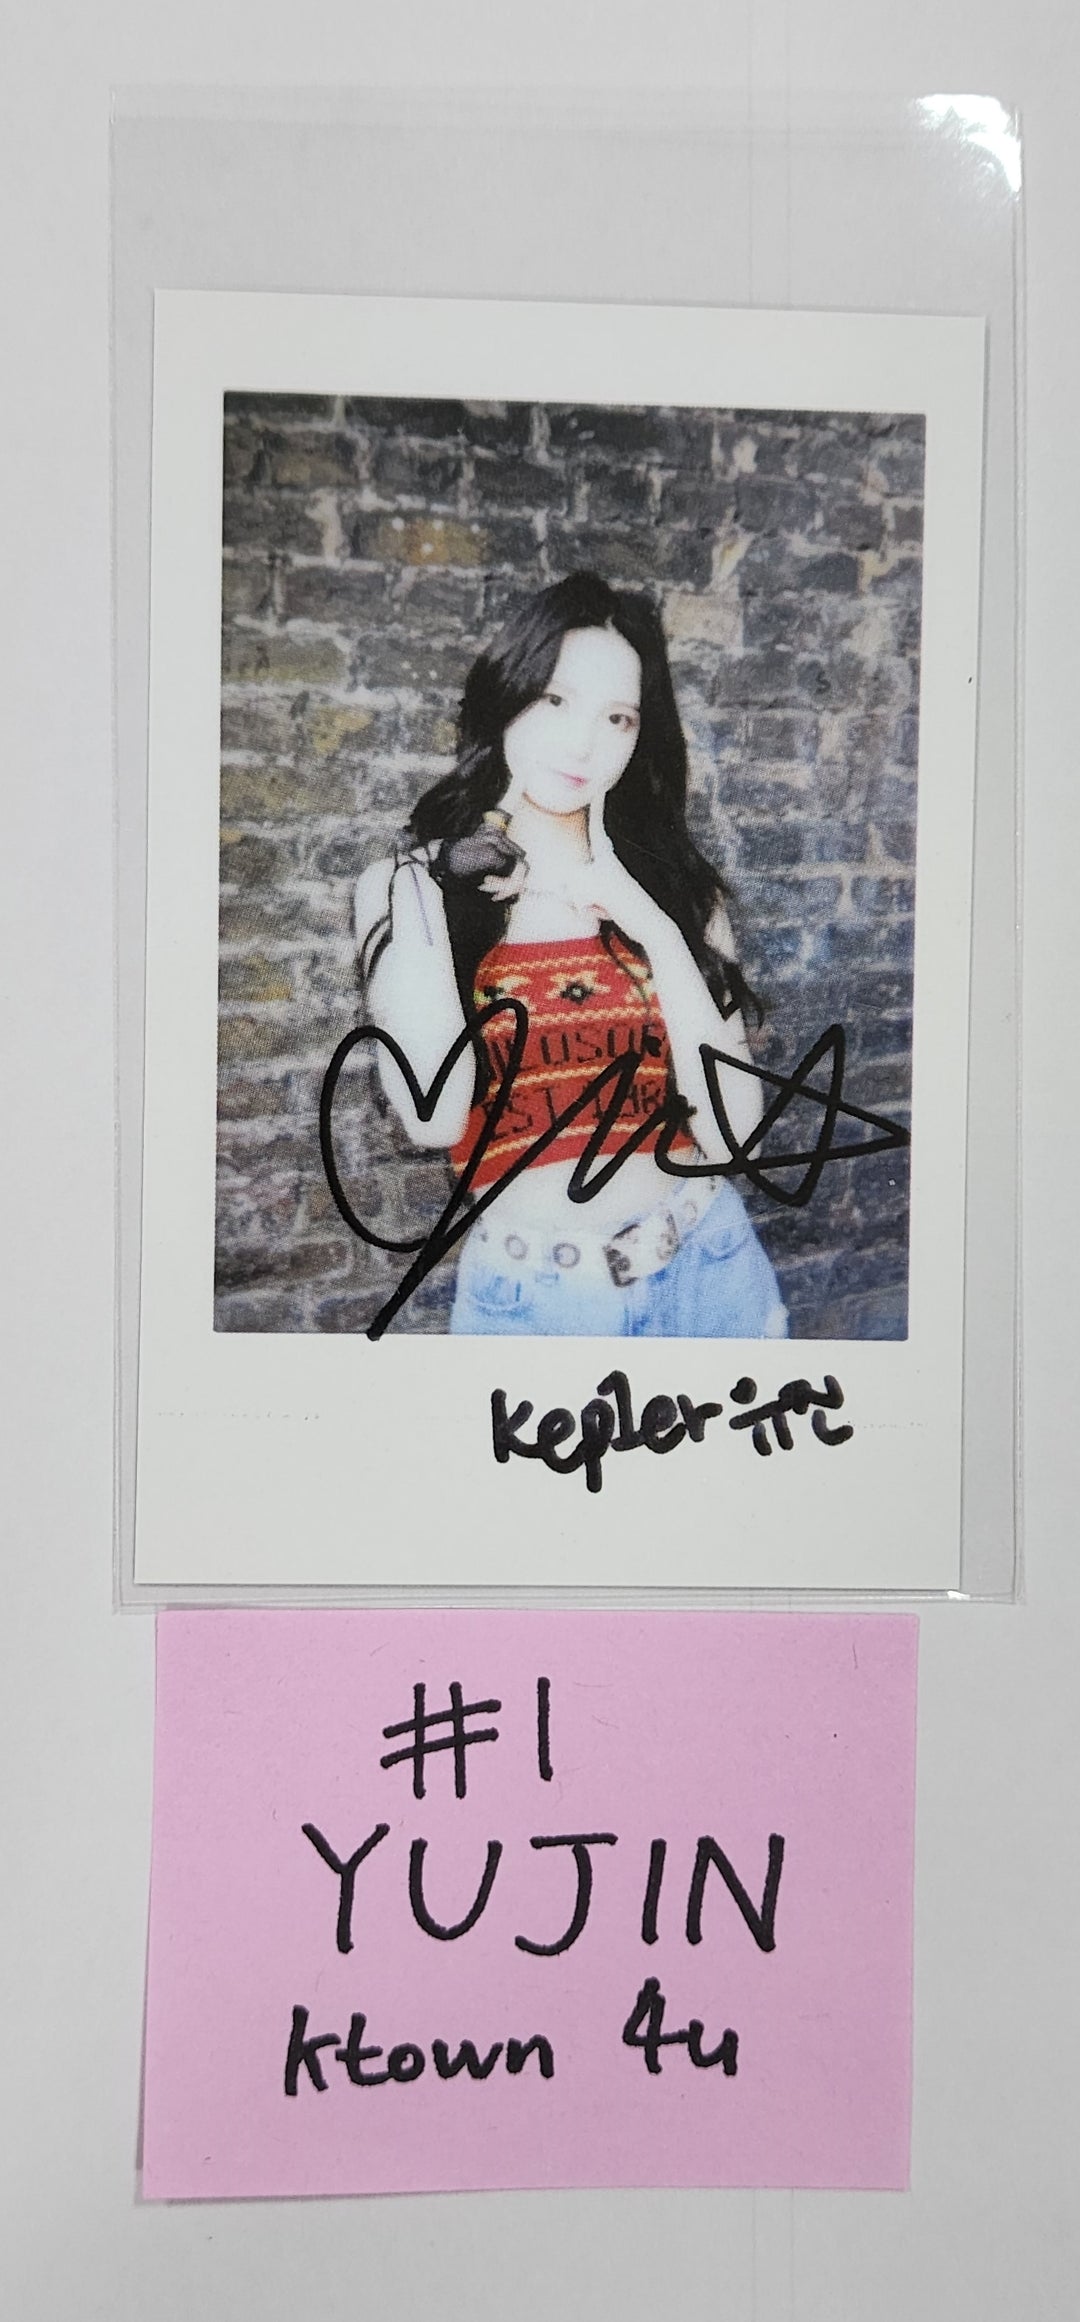 Kep1er "Dazzling Girls in London" 1st PhotoBook - Ktown4U Pre-Order Benefit Polaroid Type Photocard